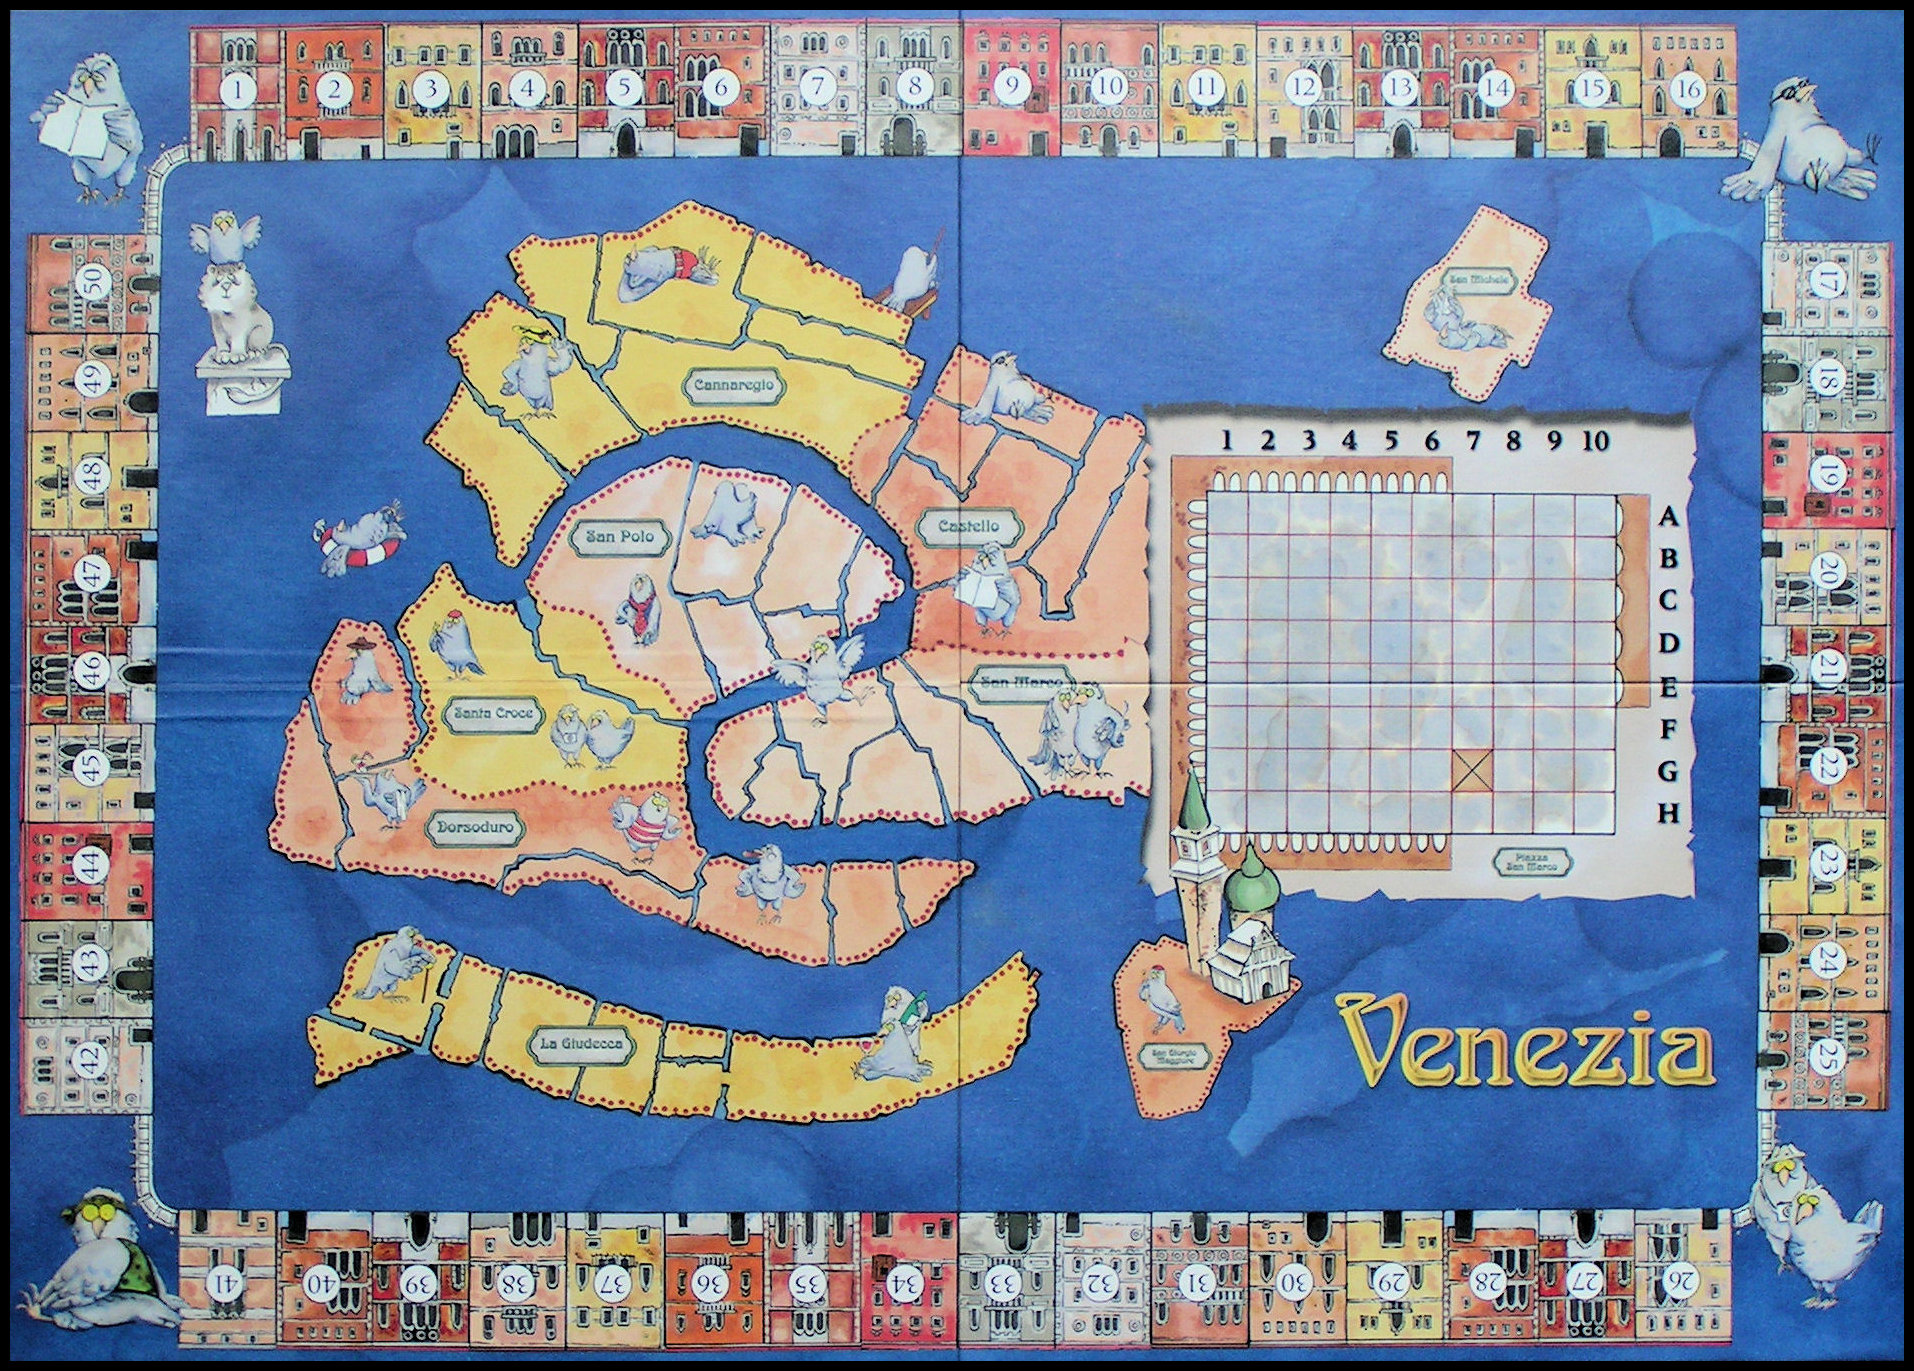 Venezia - Main Game Board